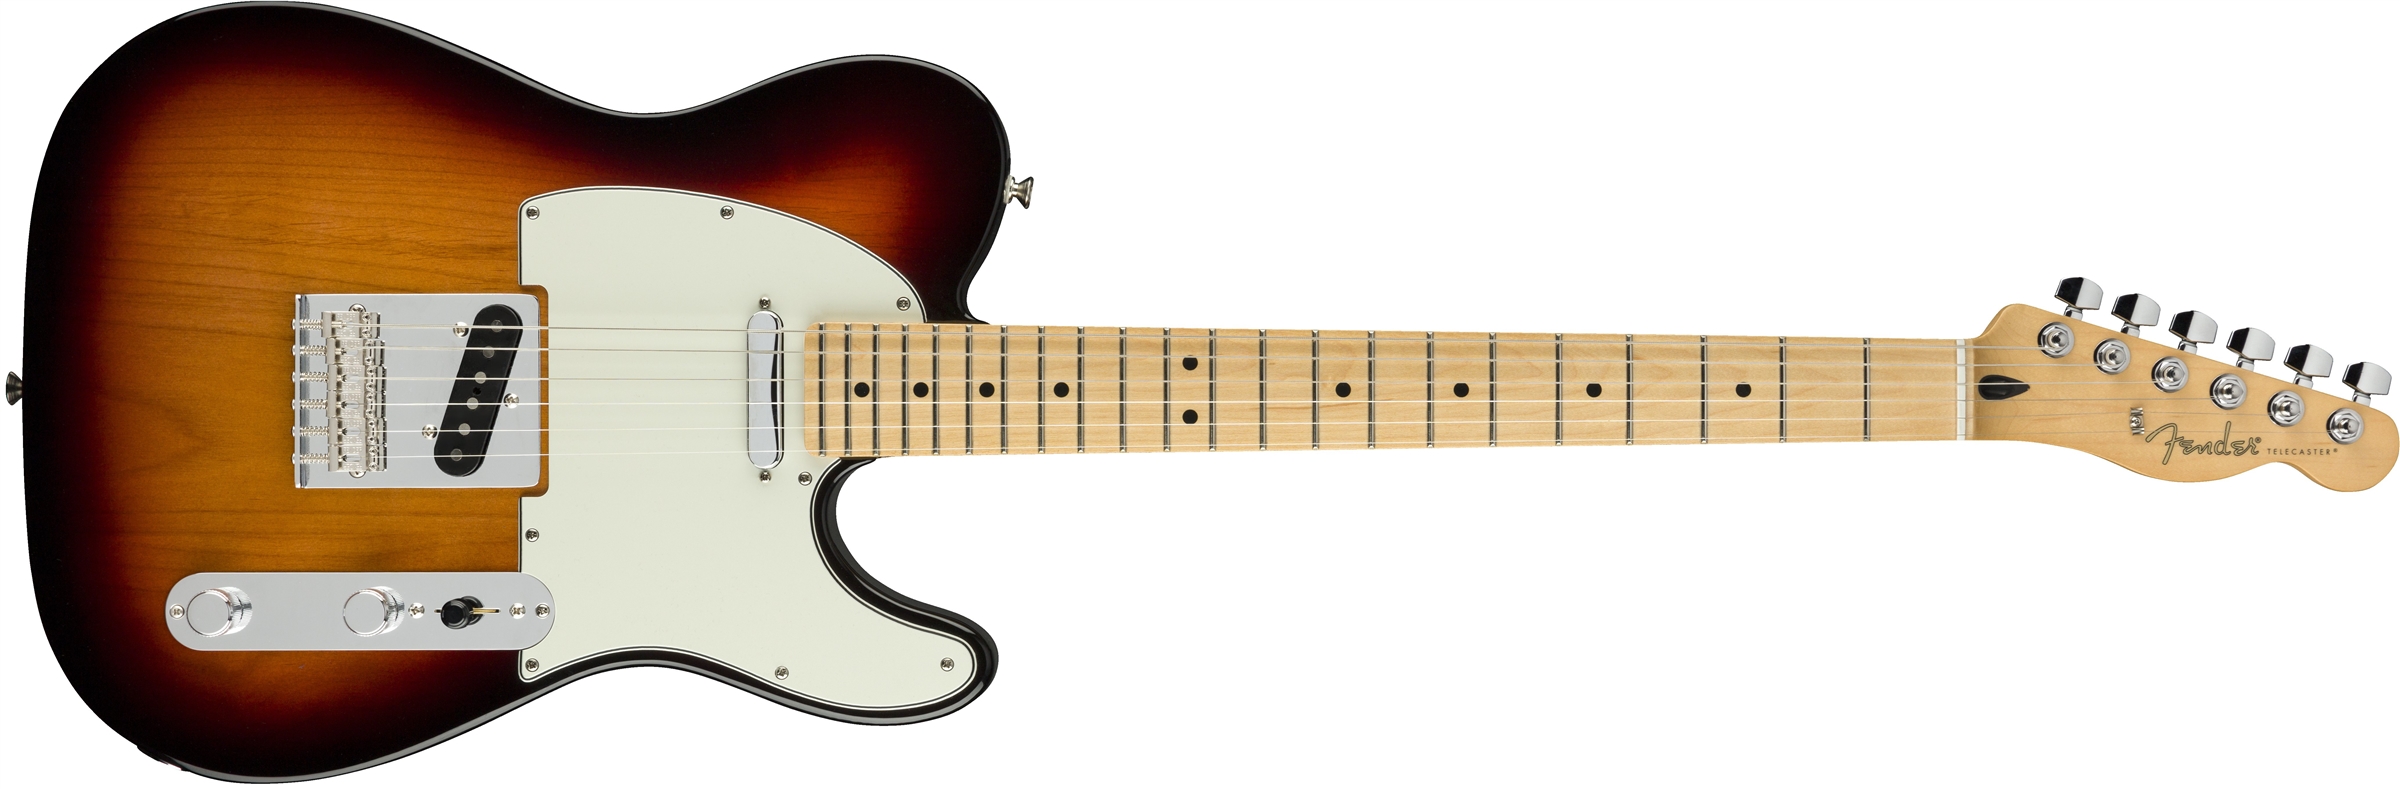 Fender Tele Player Mex Mn - 3-color Sunburst - Guitarra eléctrica con forma de tel - Variation 1